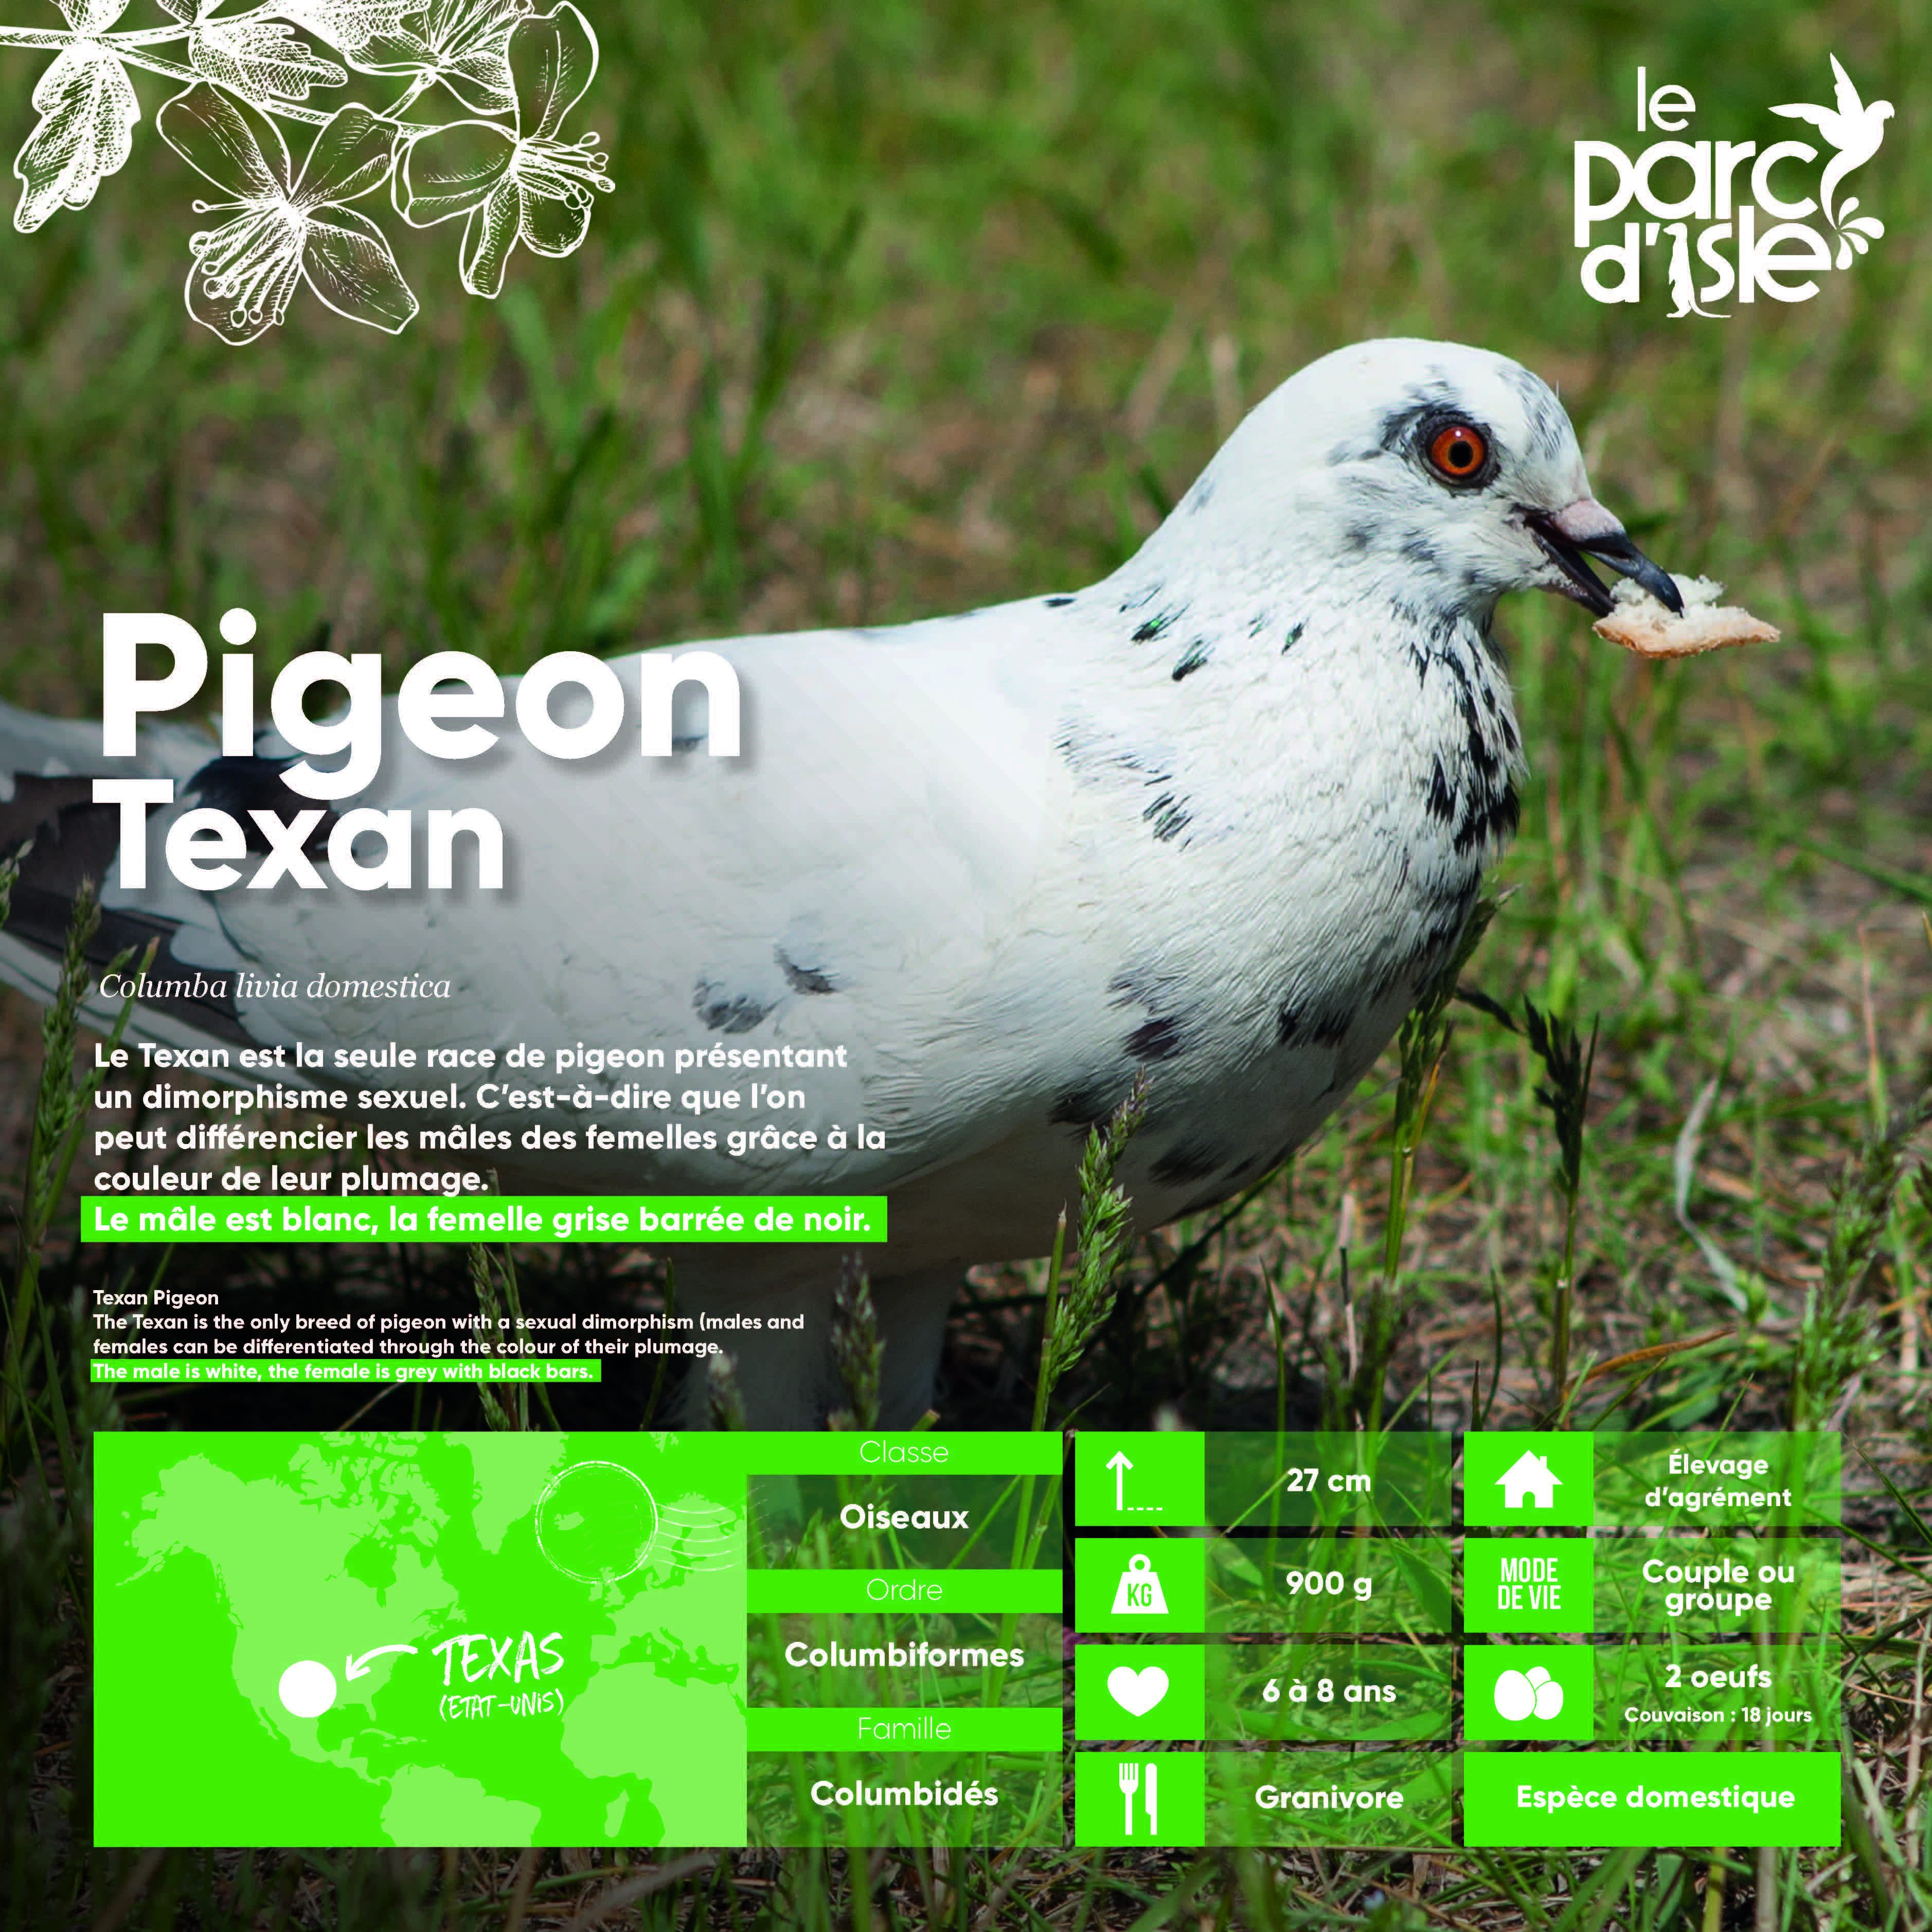 Pigeon Texan - Agrandir l'image, .JPG 1,14Mo (fenêtre modale)